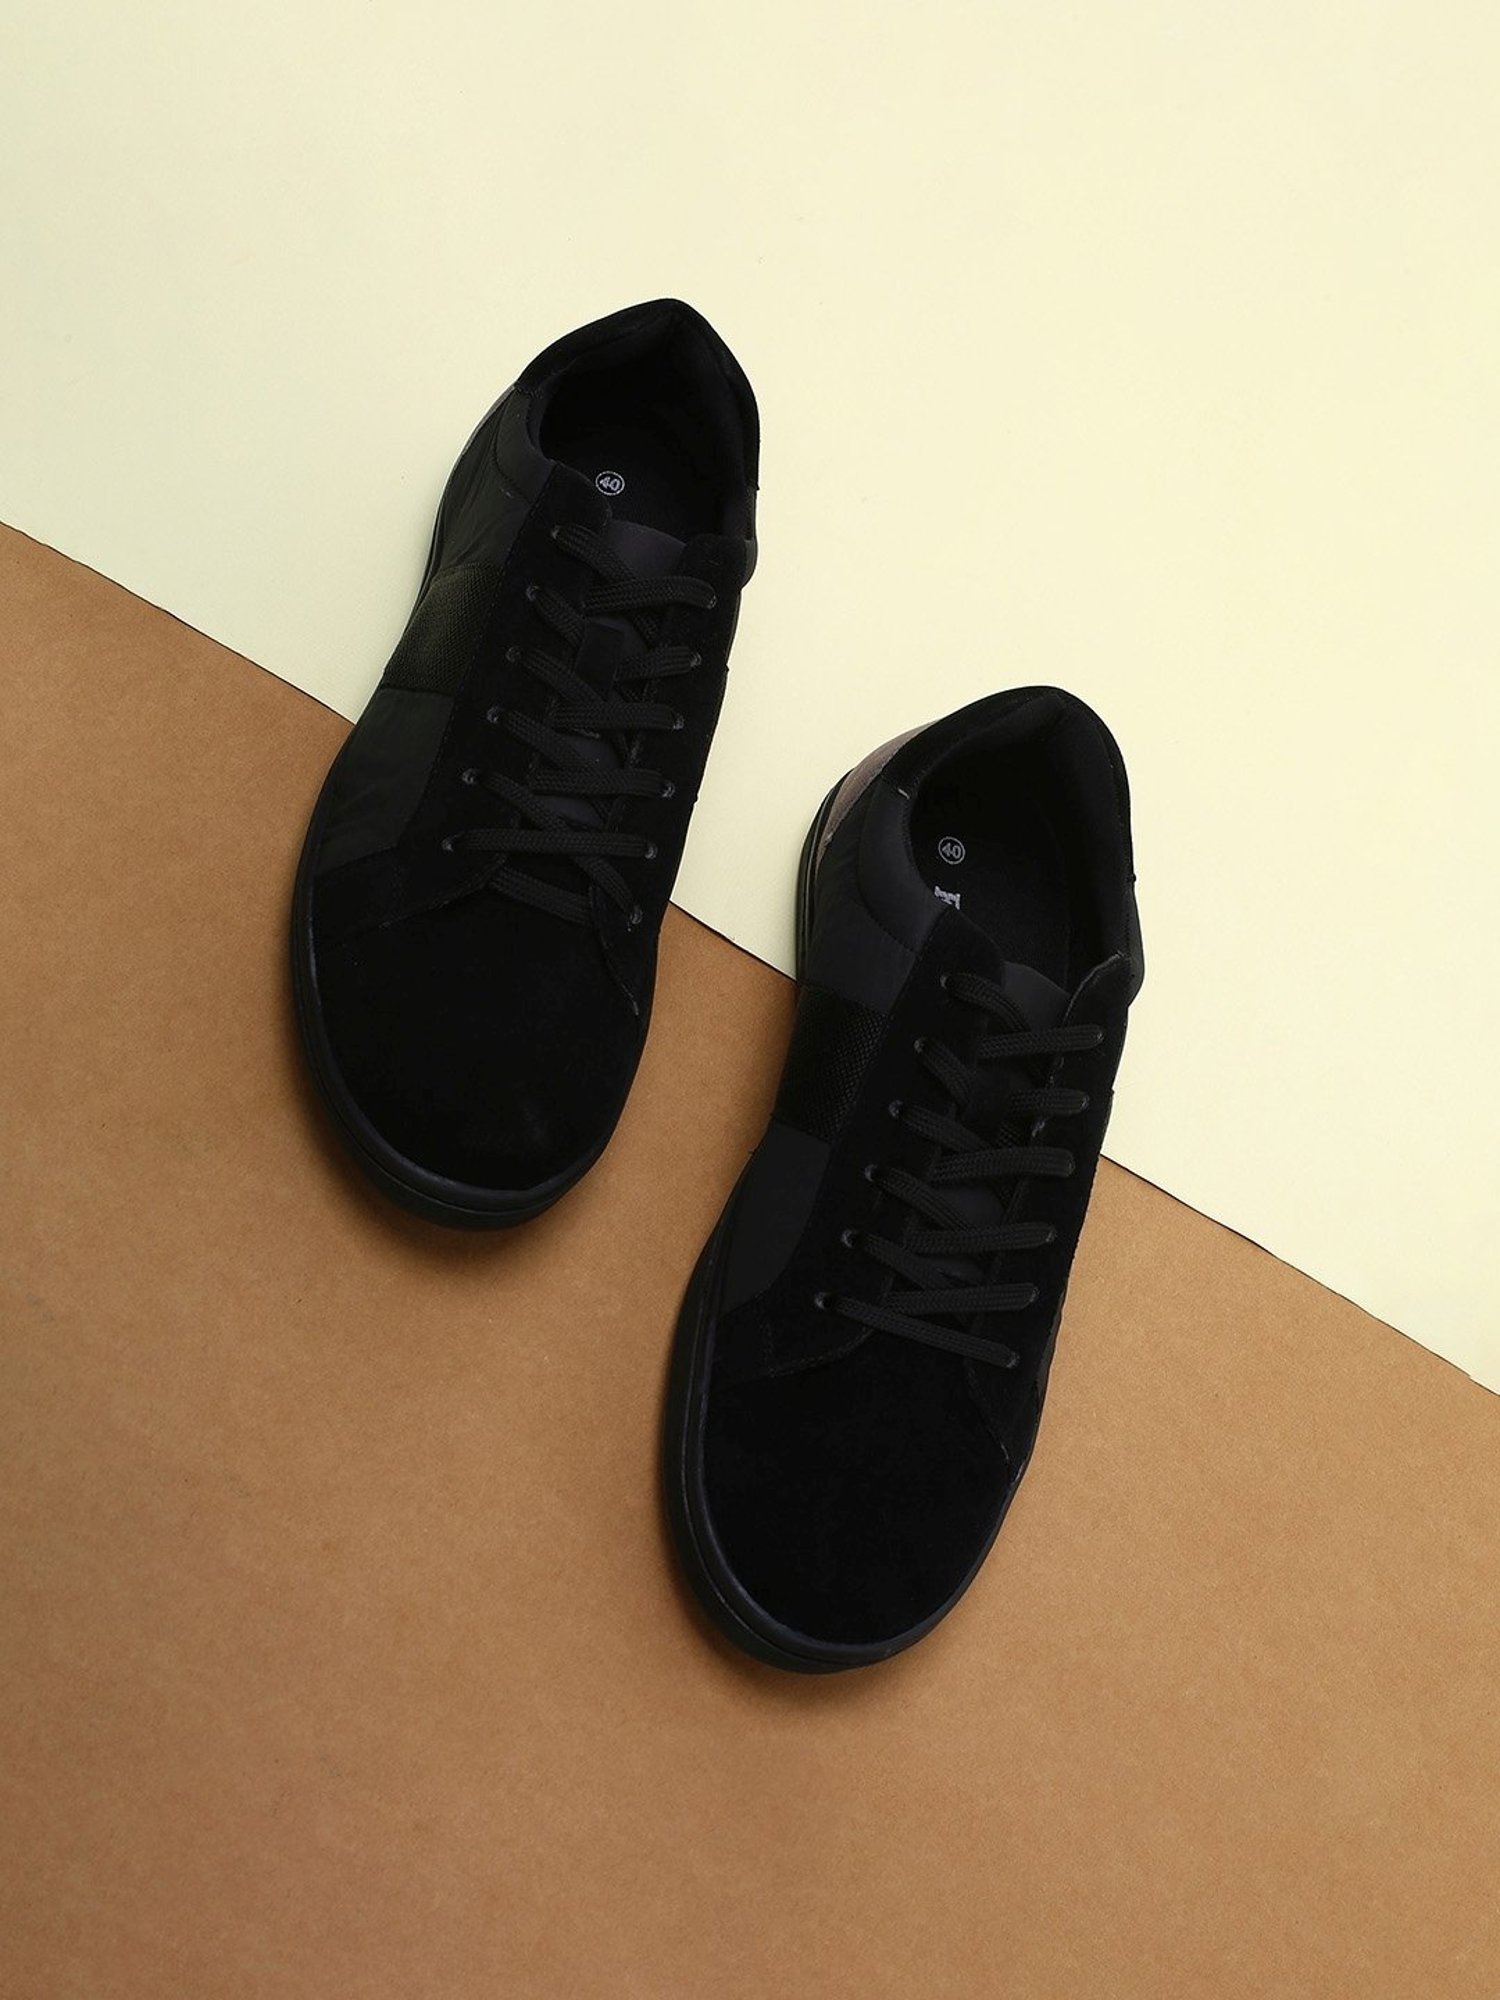 Men's Premier Leather High Top Sneaker In Black Leather - Thursday